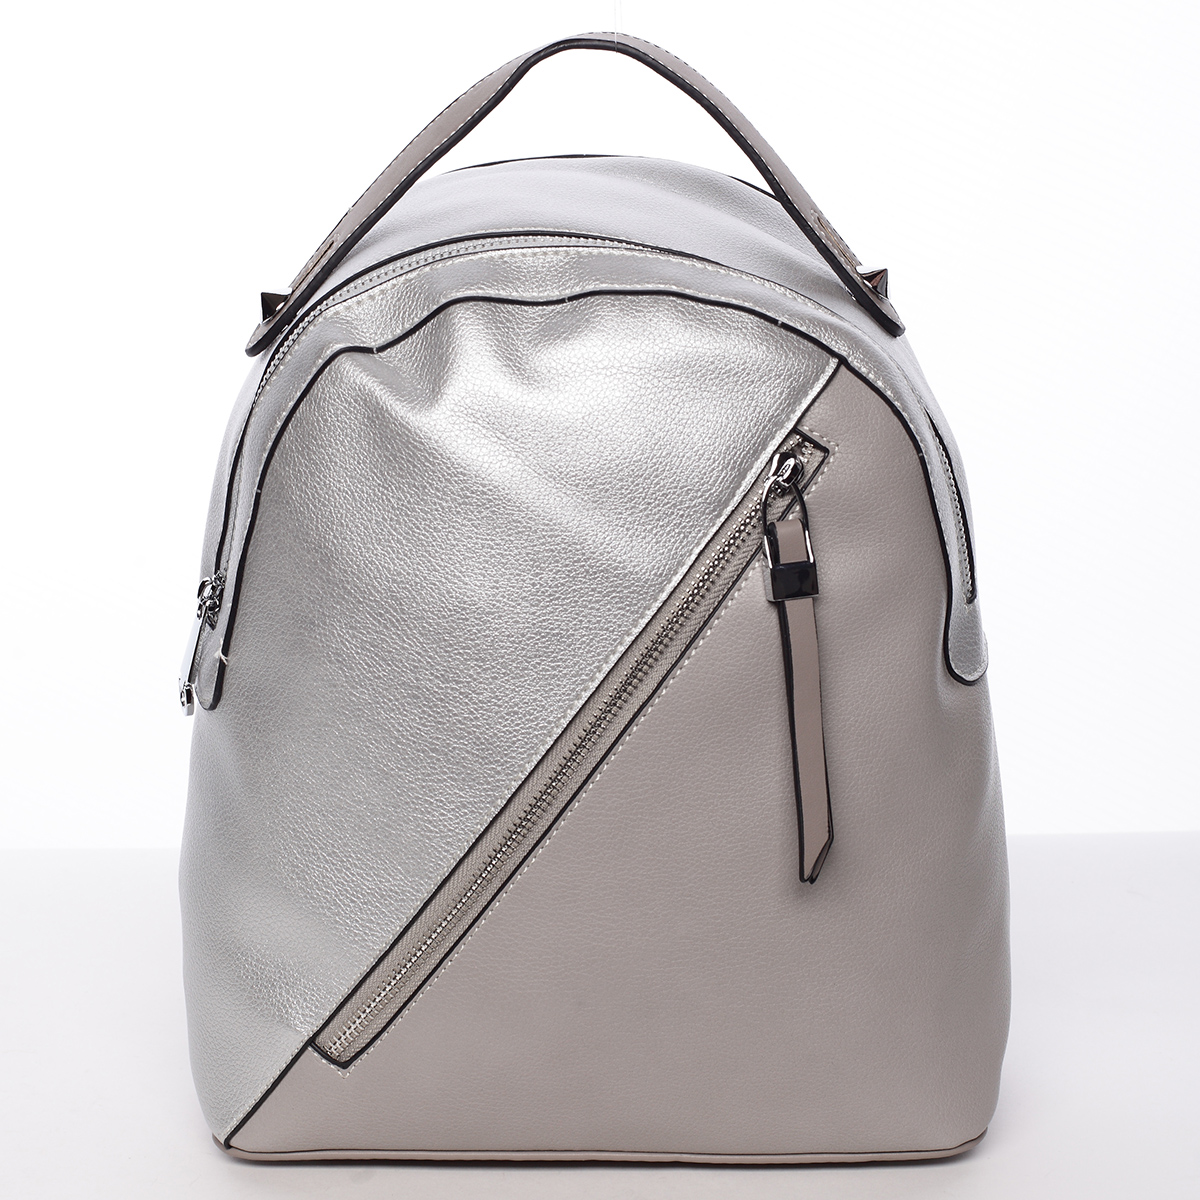 Handbags & Backpacks ◇ Kabelky & Batohy